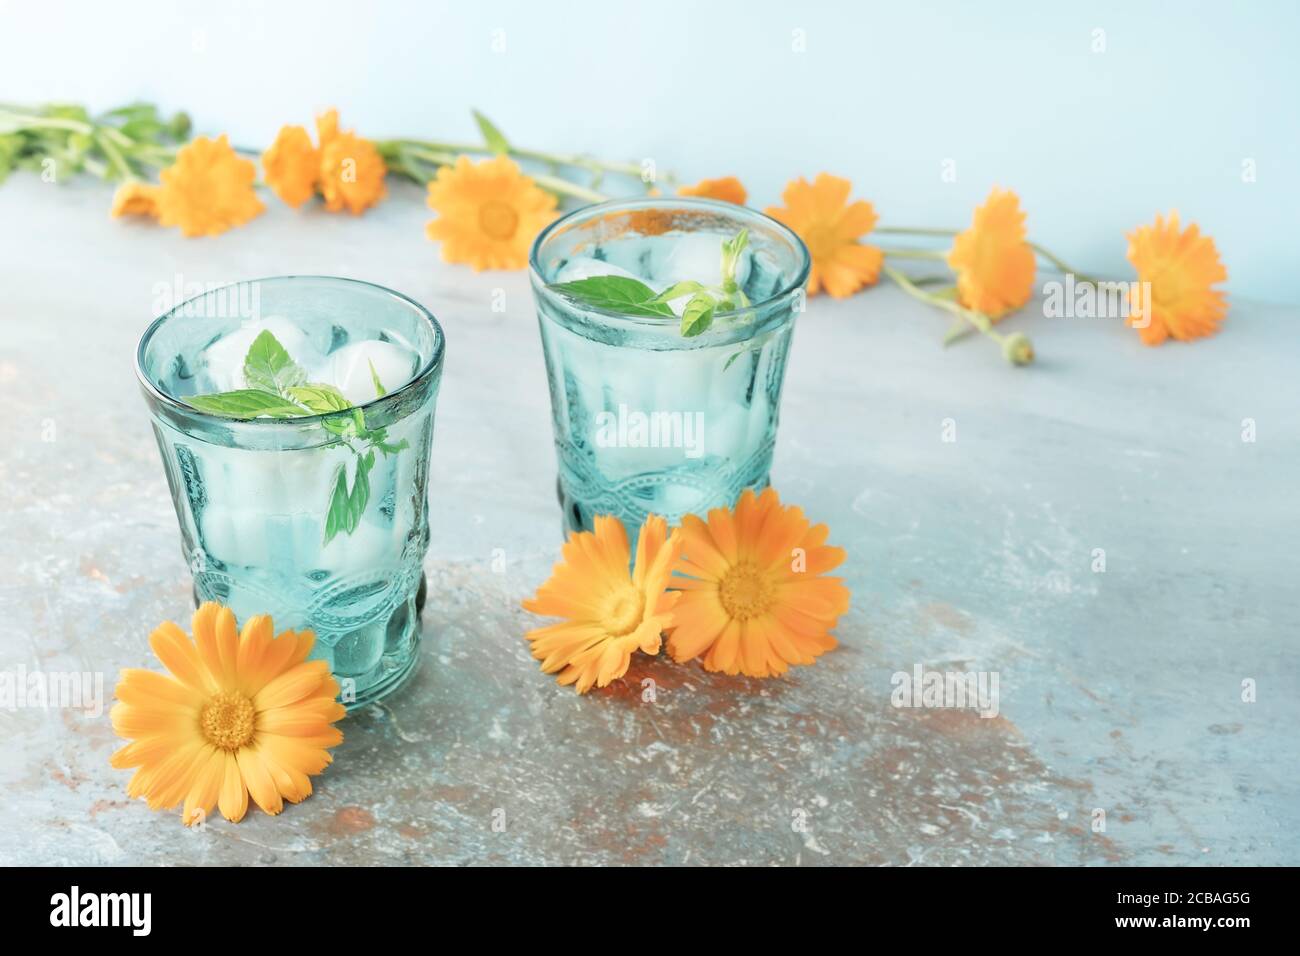 Flor turquesa fotografías e imágenes de alta resolución - Alamy